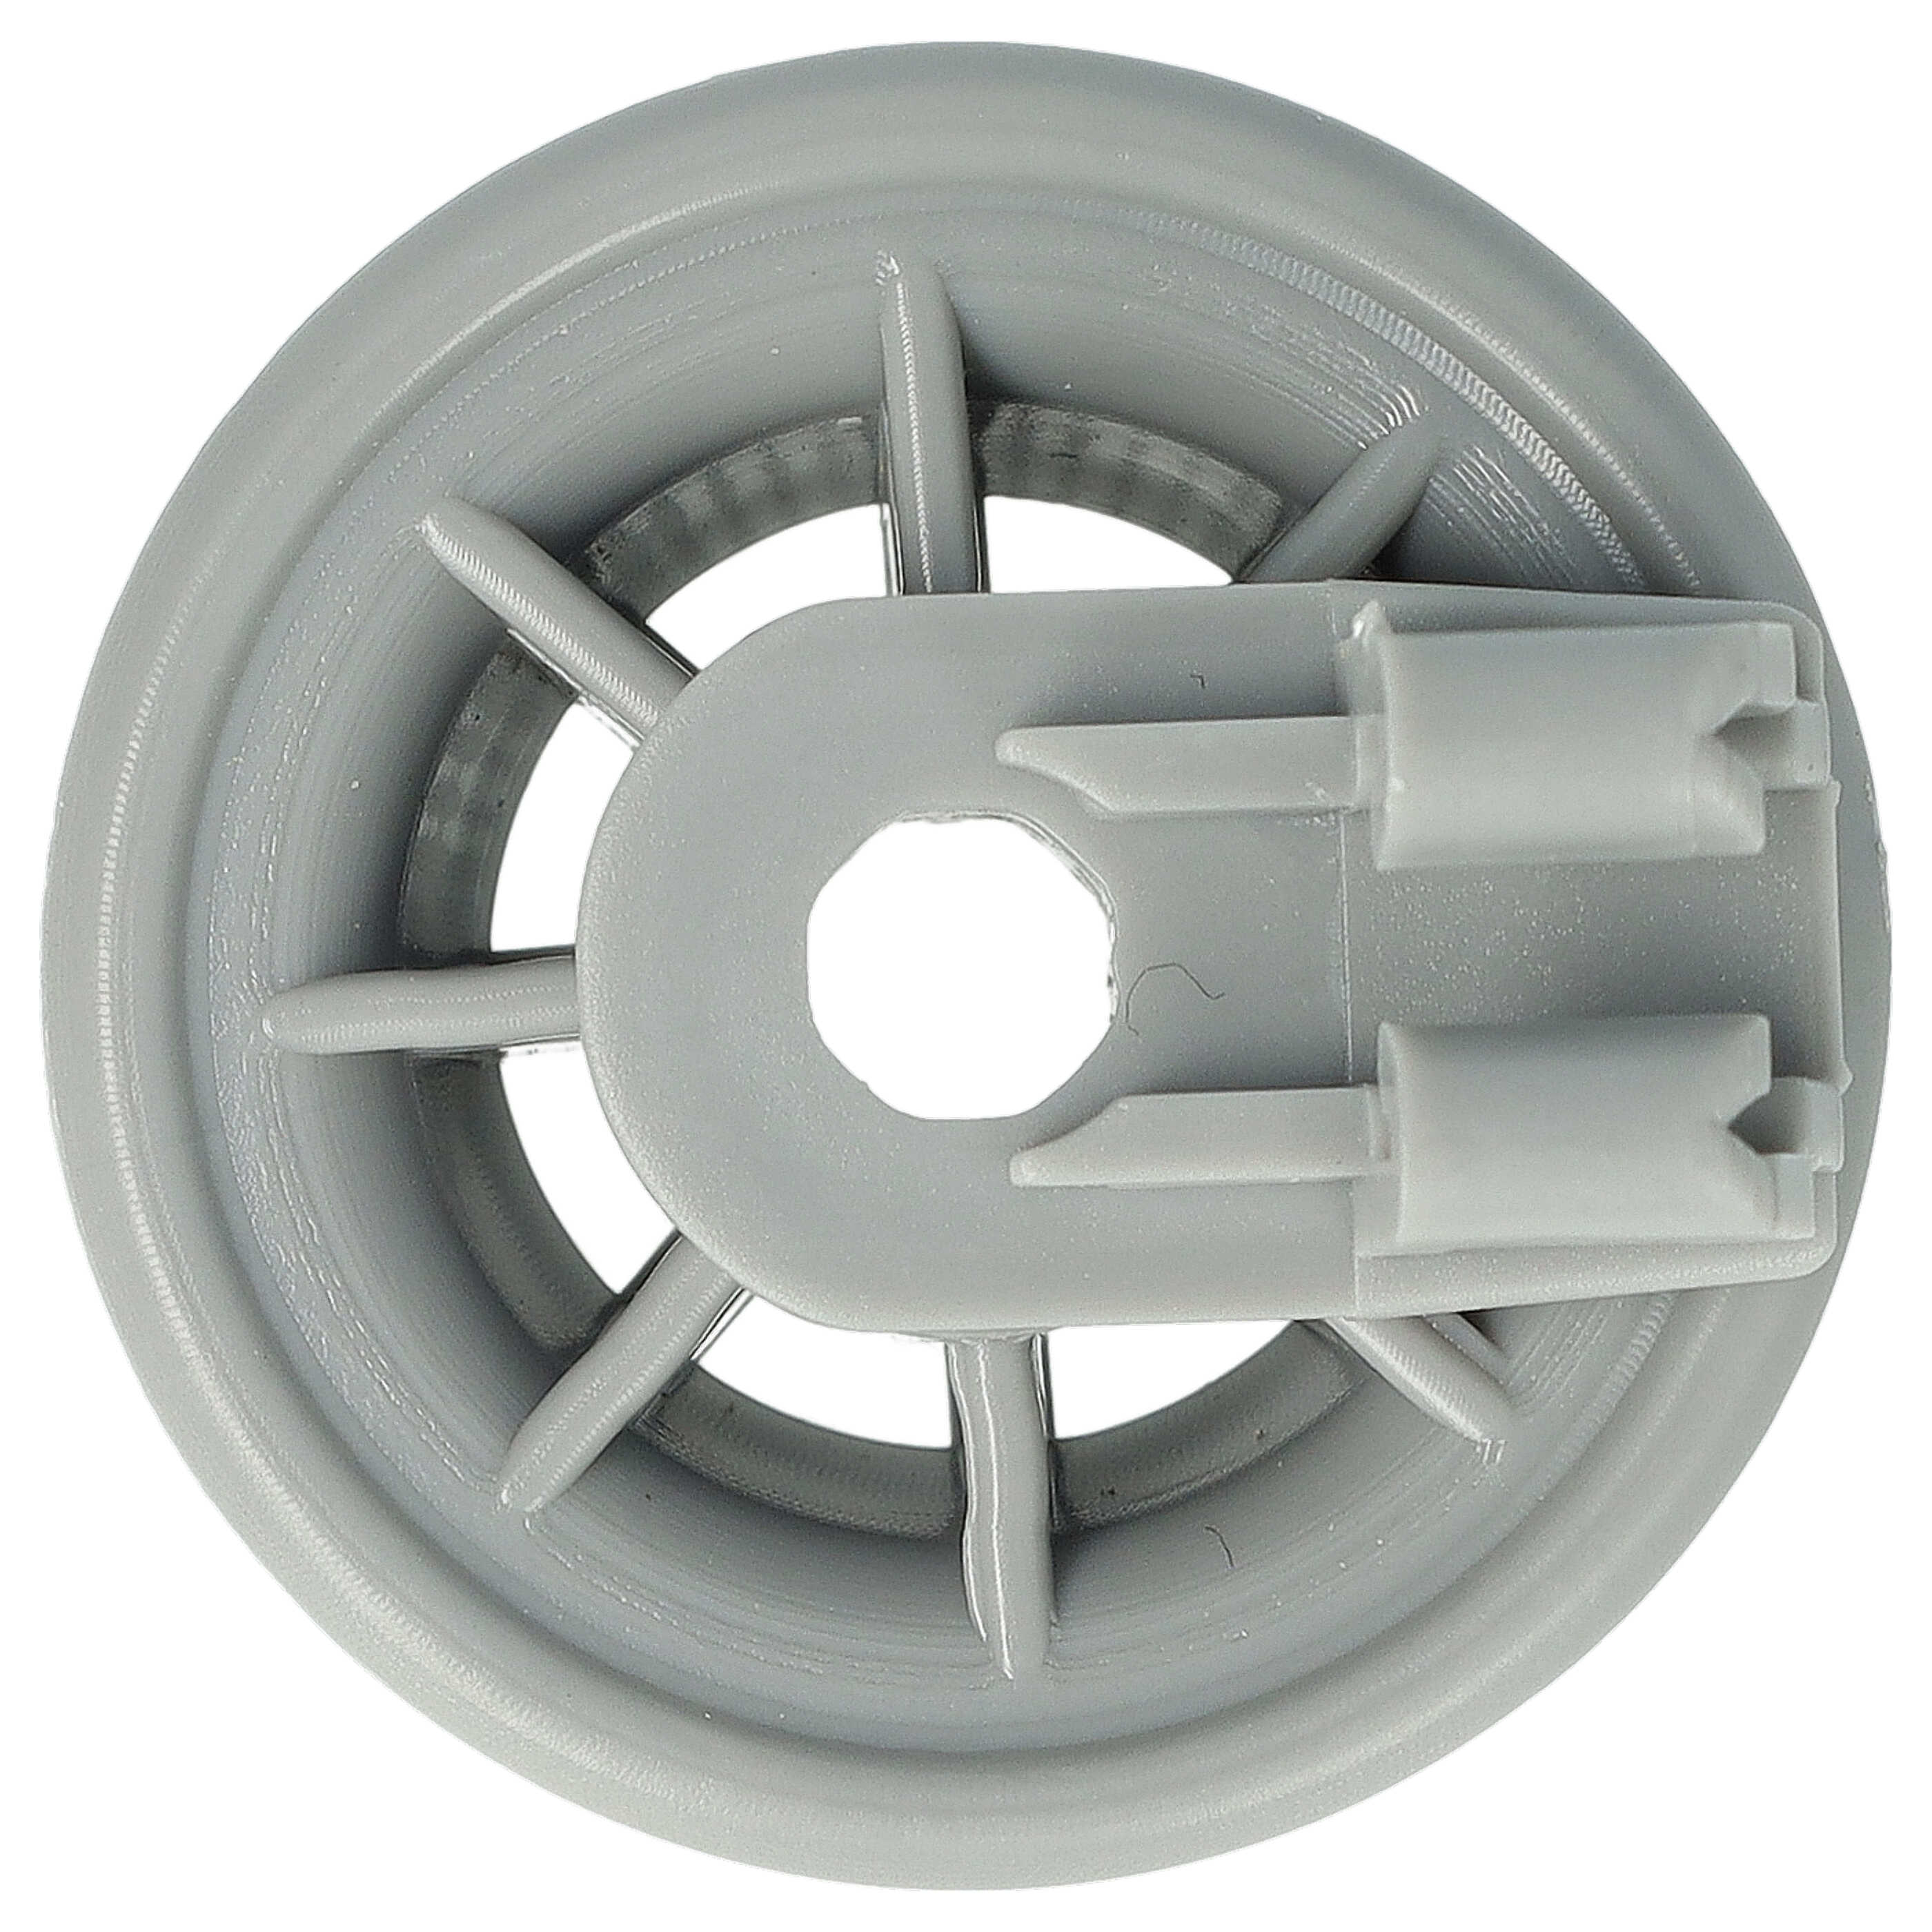 4x Lower Basket Wheel Diameter 35 mm replaces Bosch 00170838, 00183955, 00170834 for Hanseatic Dishwasher